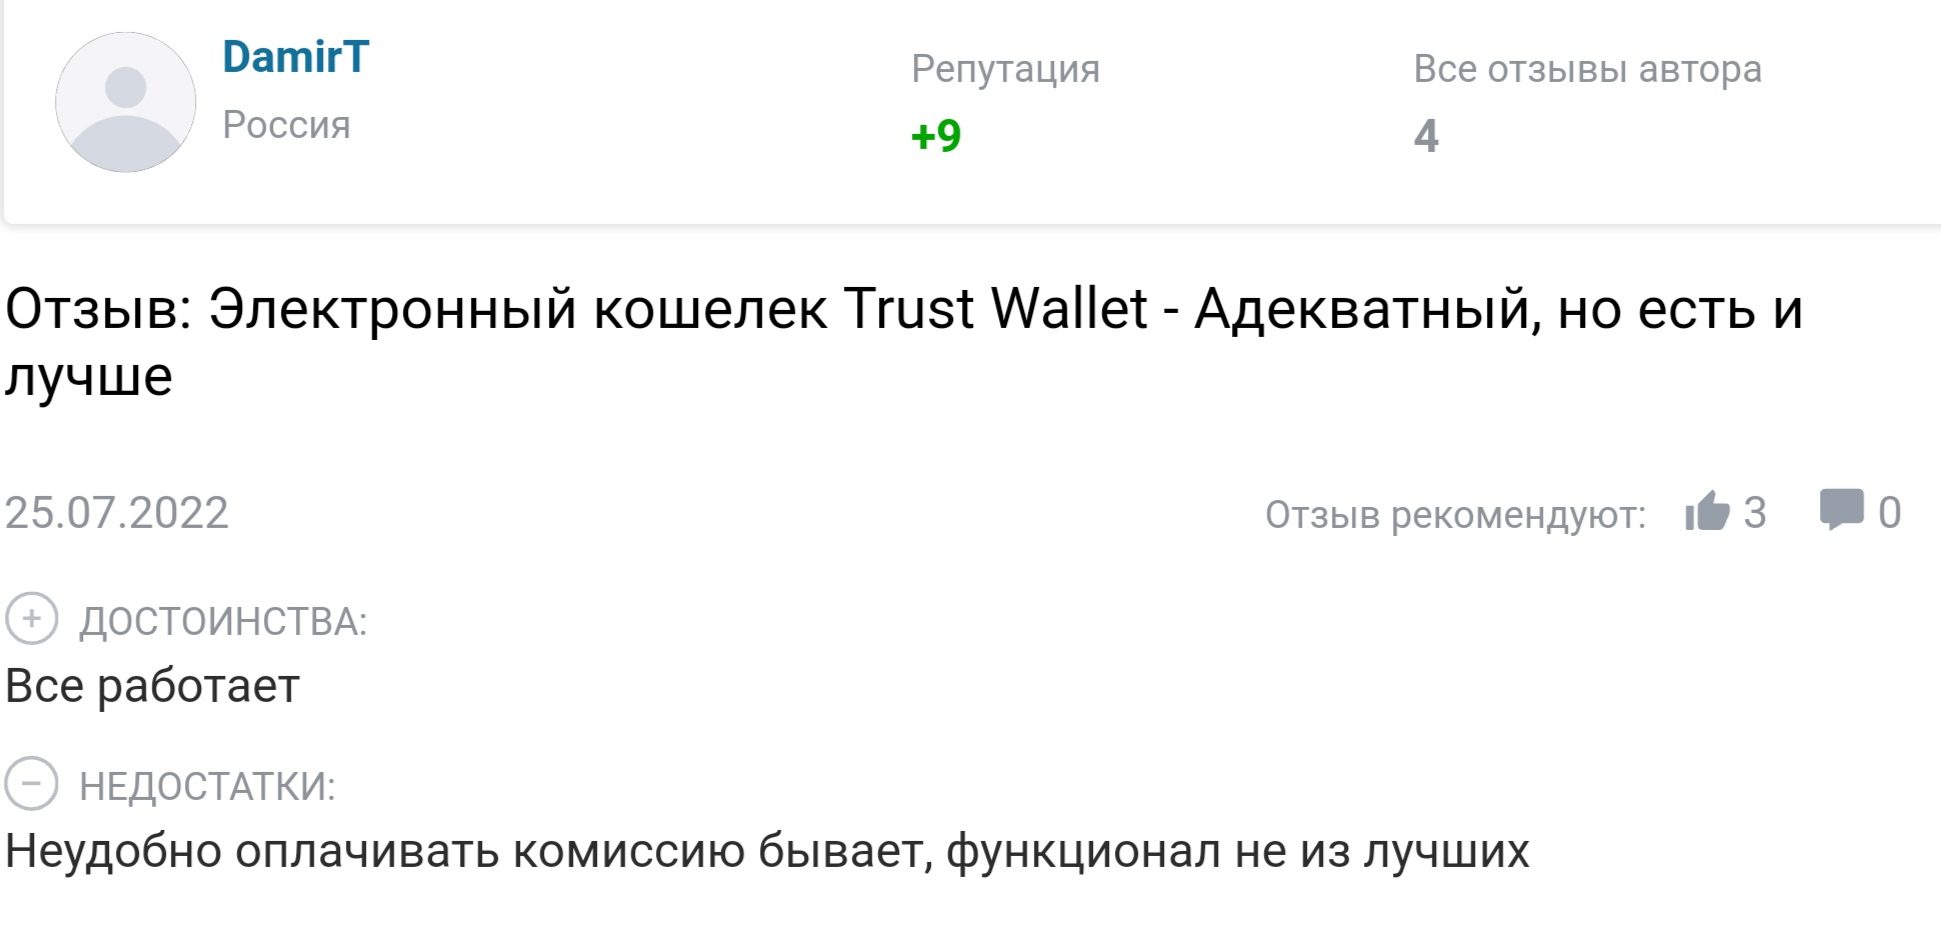 Trust Wallet отзывы